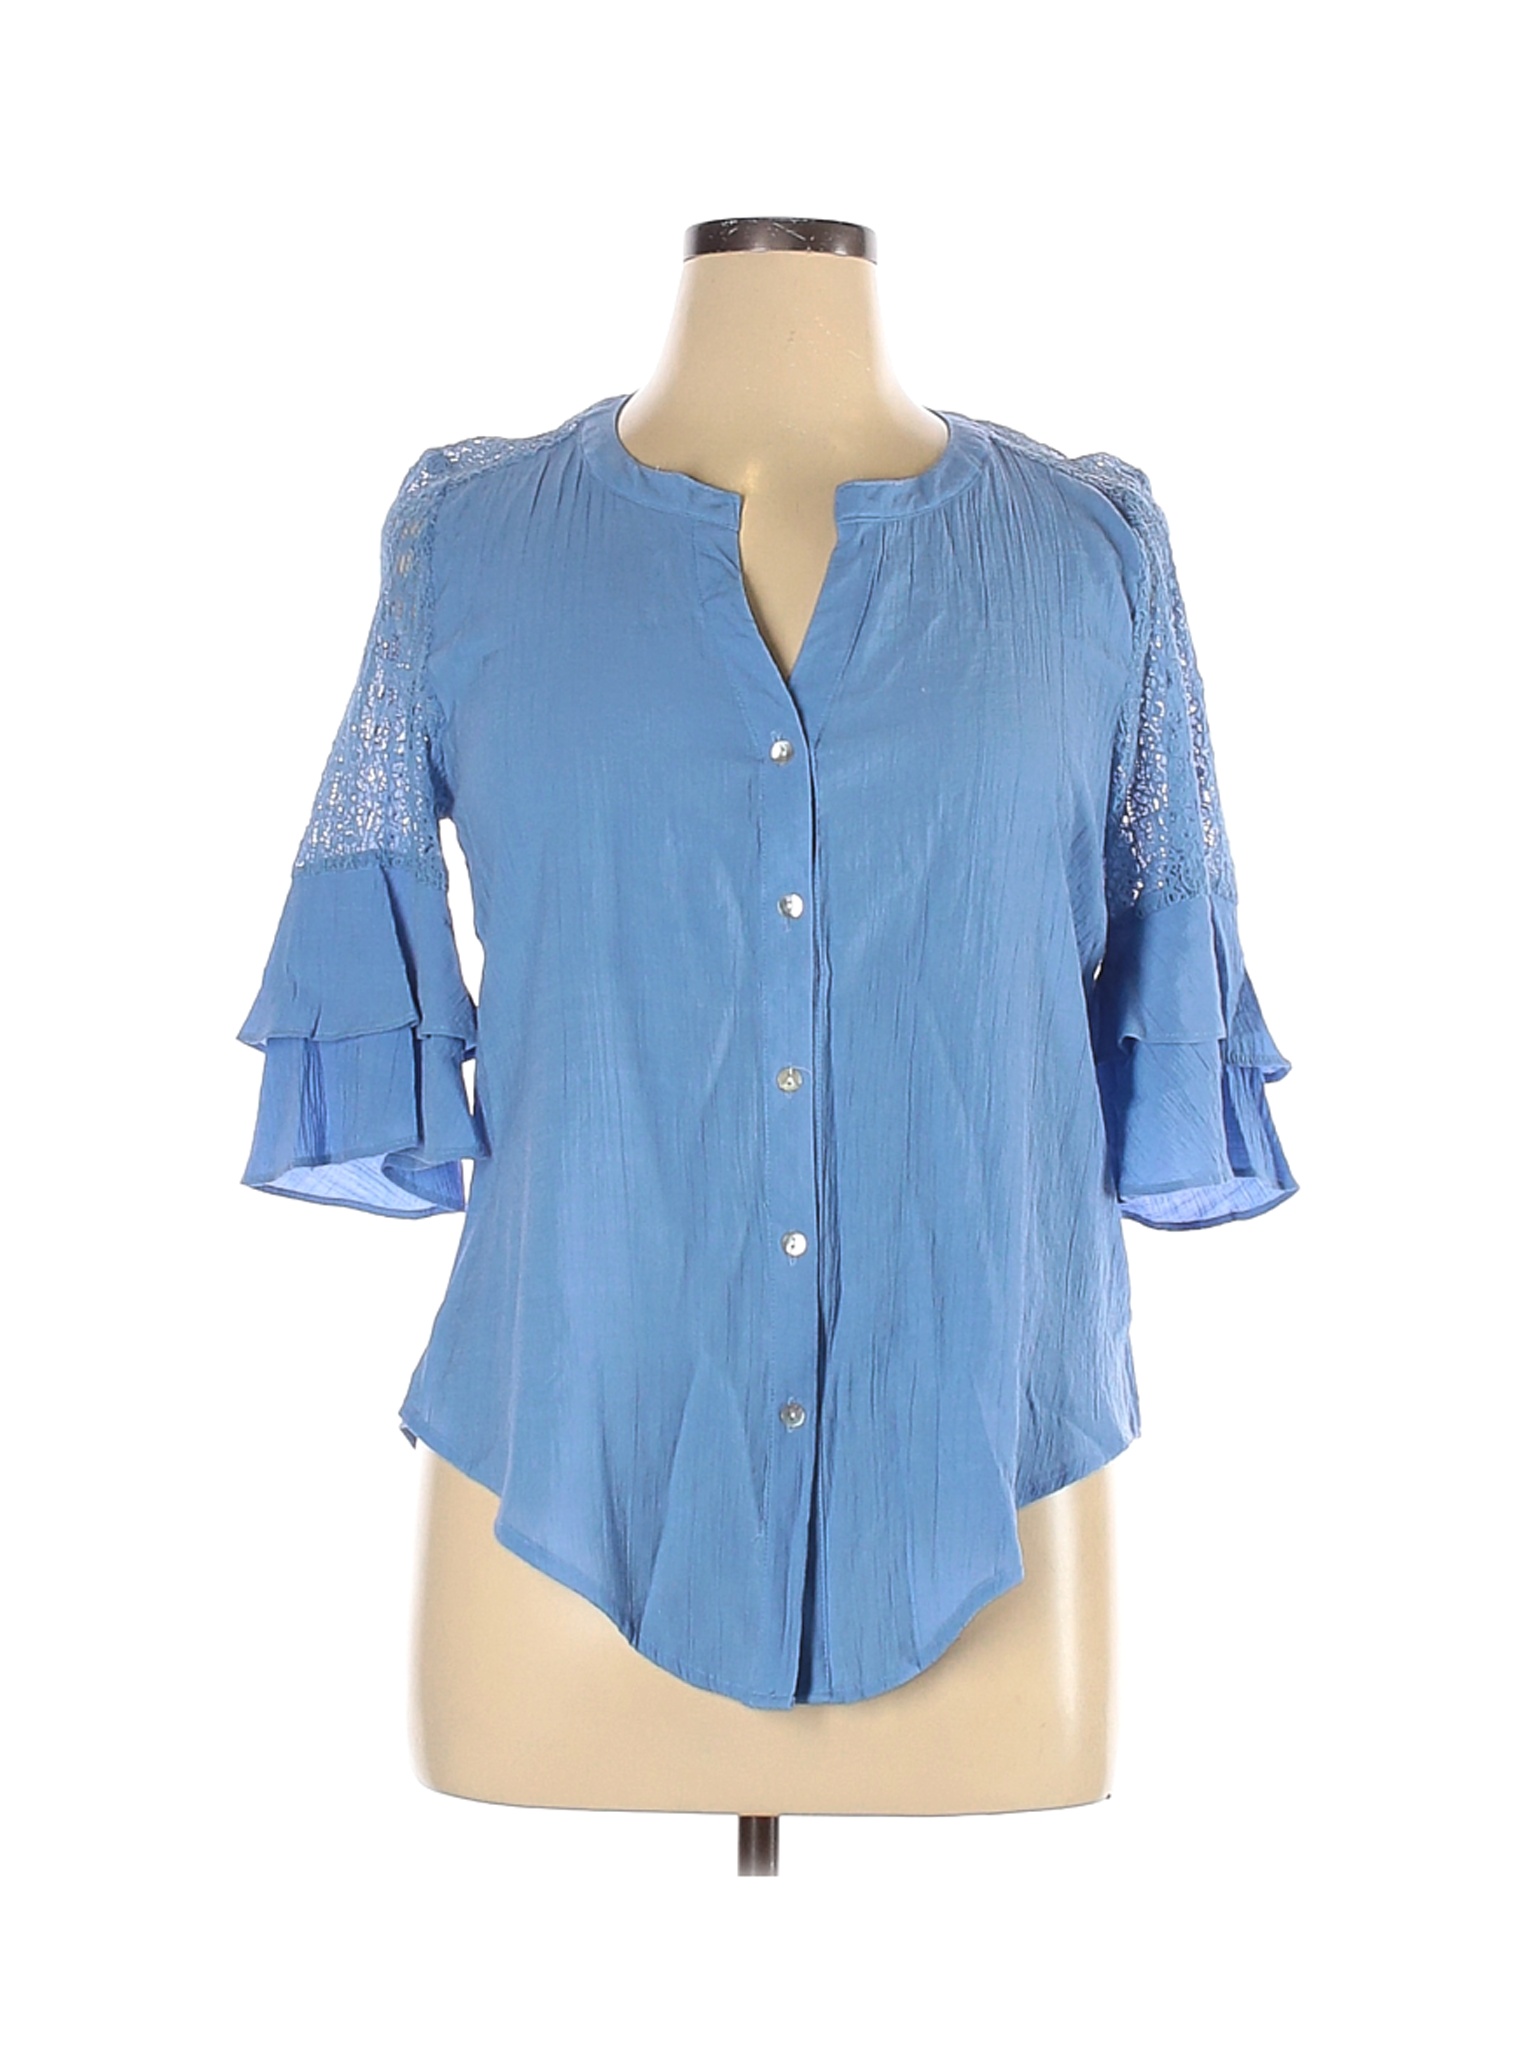 NY Collection Women Blue 3/4 Sleeve Blouse XL Petites | eBay